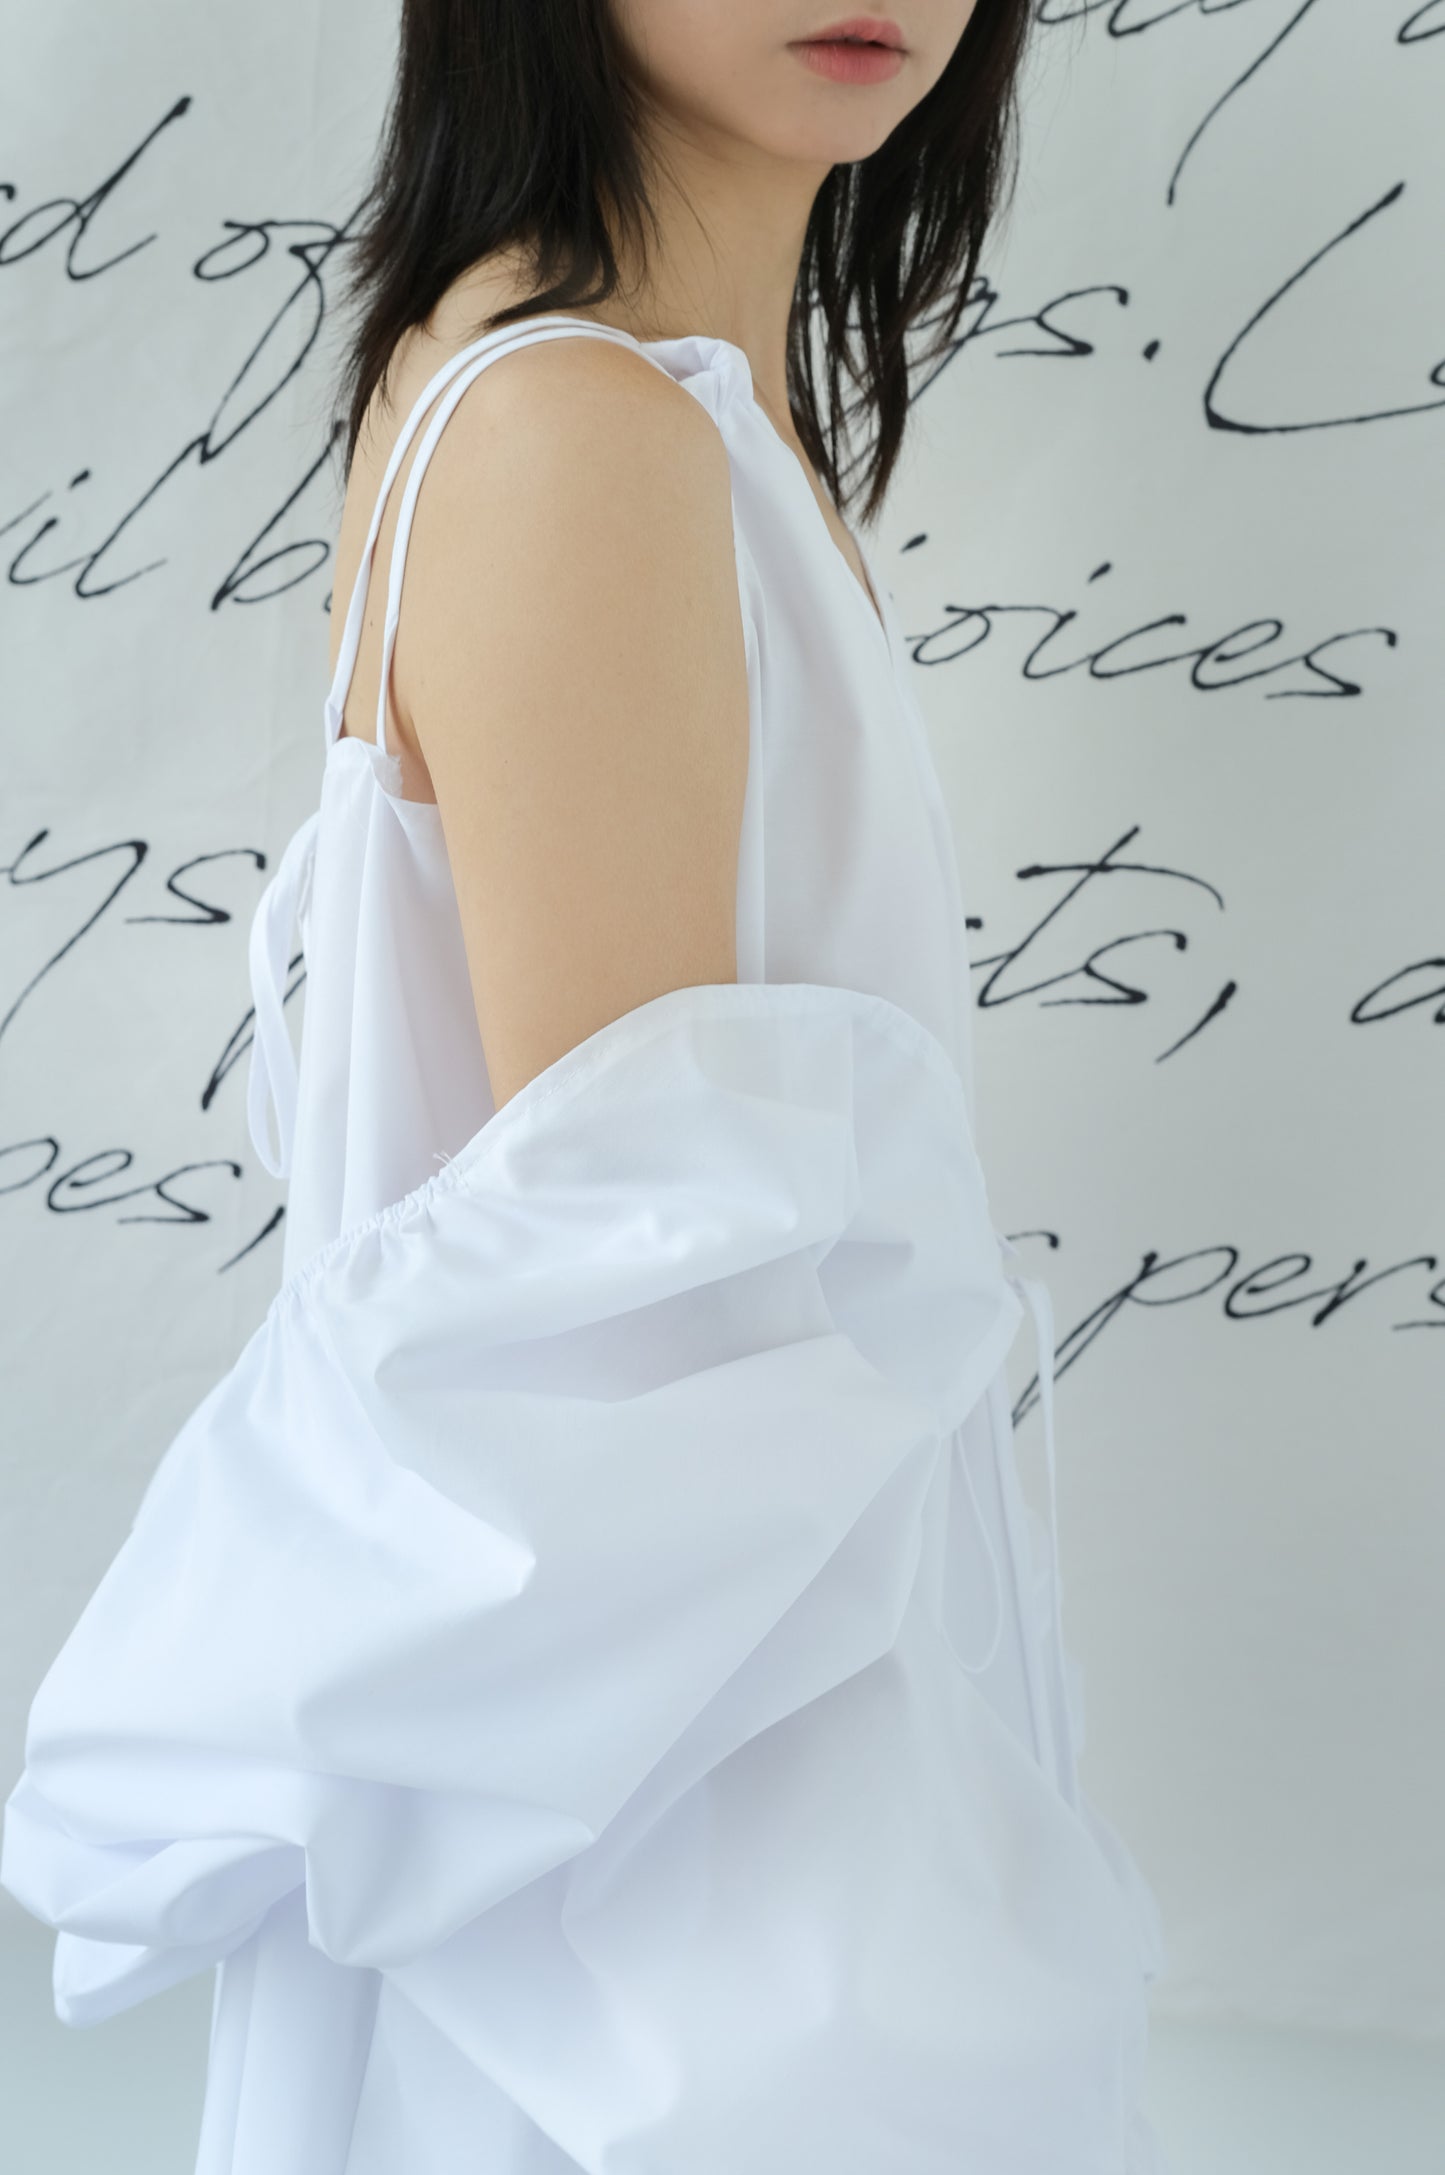 Solid cotton linen blouse dress in cream white